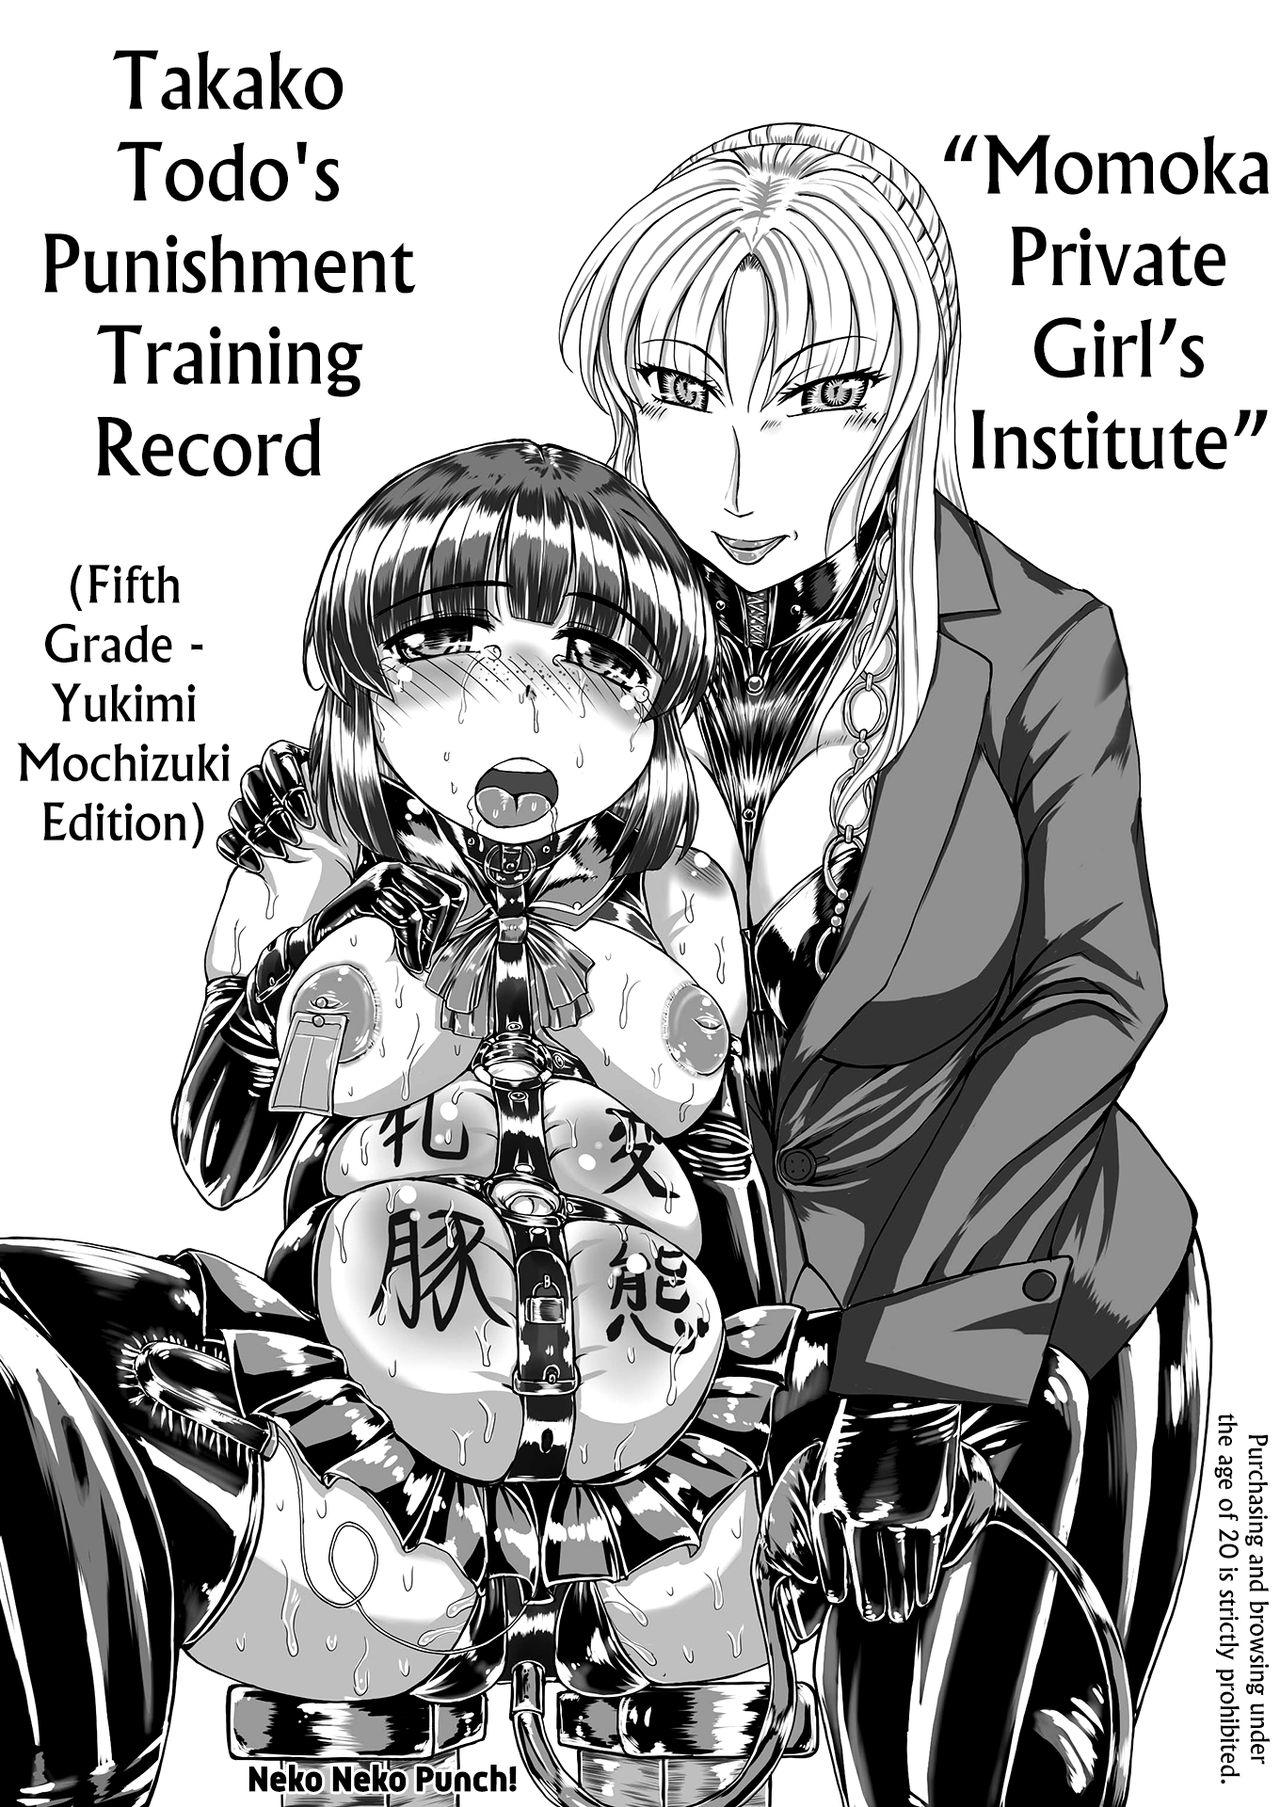 Anal Sex [Neko Neko Panchu!] [Momoka Private Girls Institute] [Takako Todo's Punishment Training Record] (Fifth Grade - Yukimi Mochizuki Edition) [English] Fucking Sex - Page 1